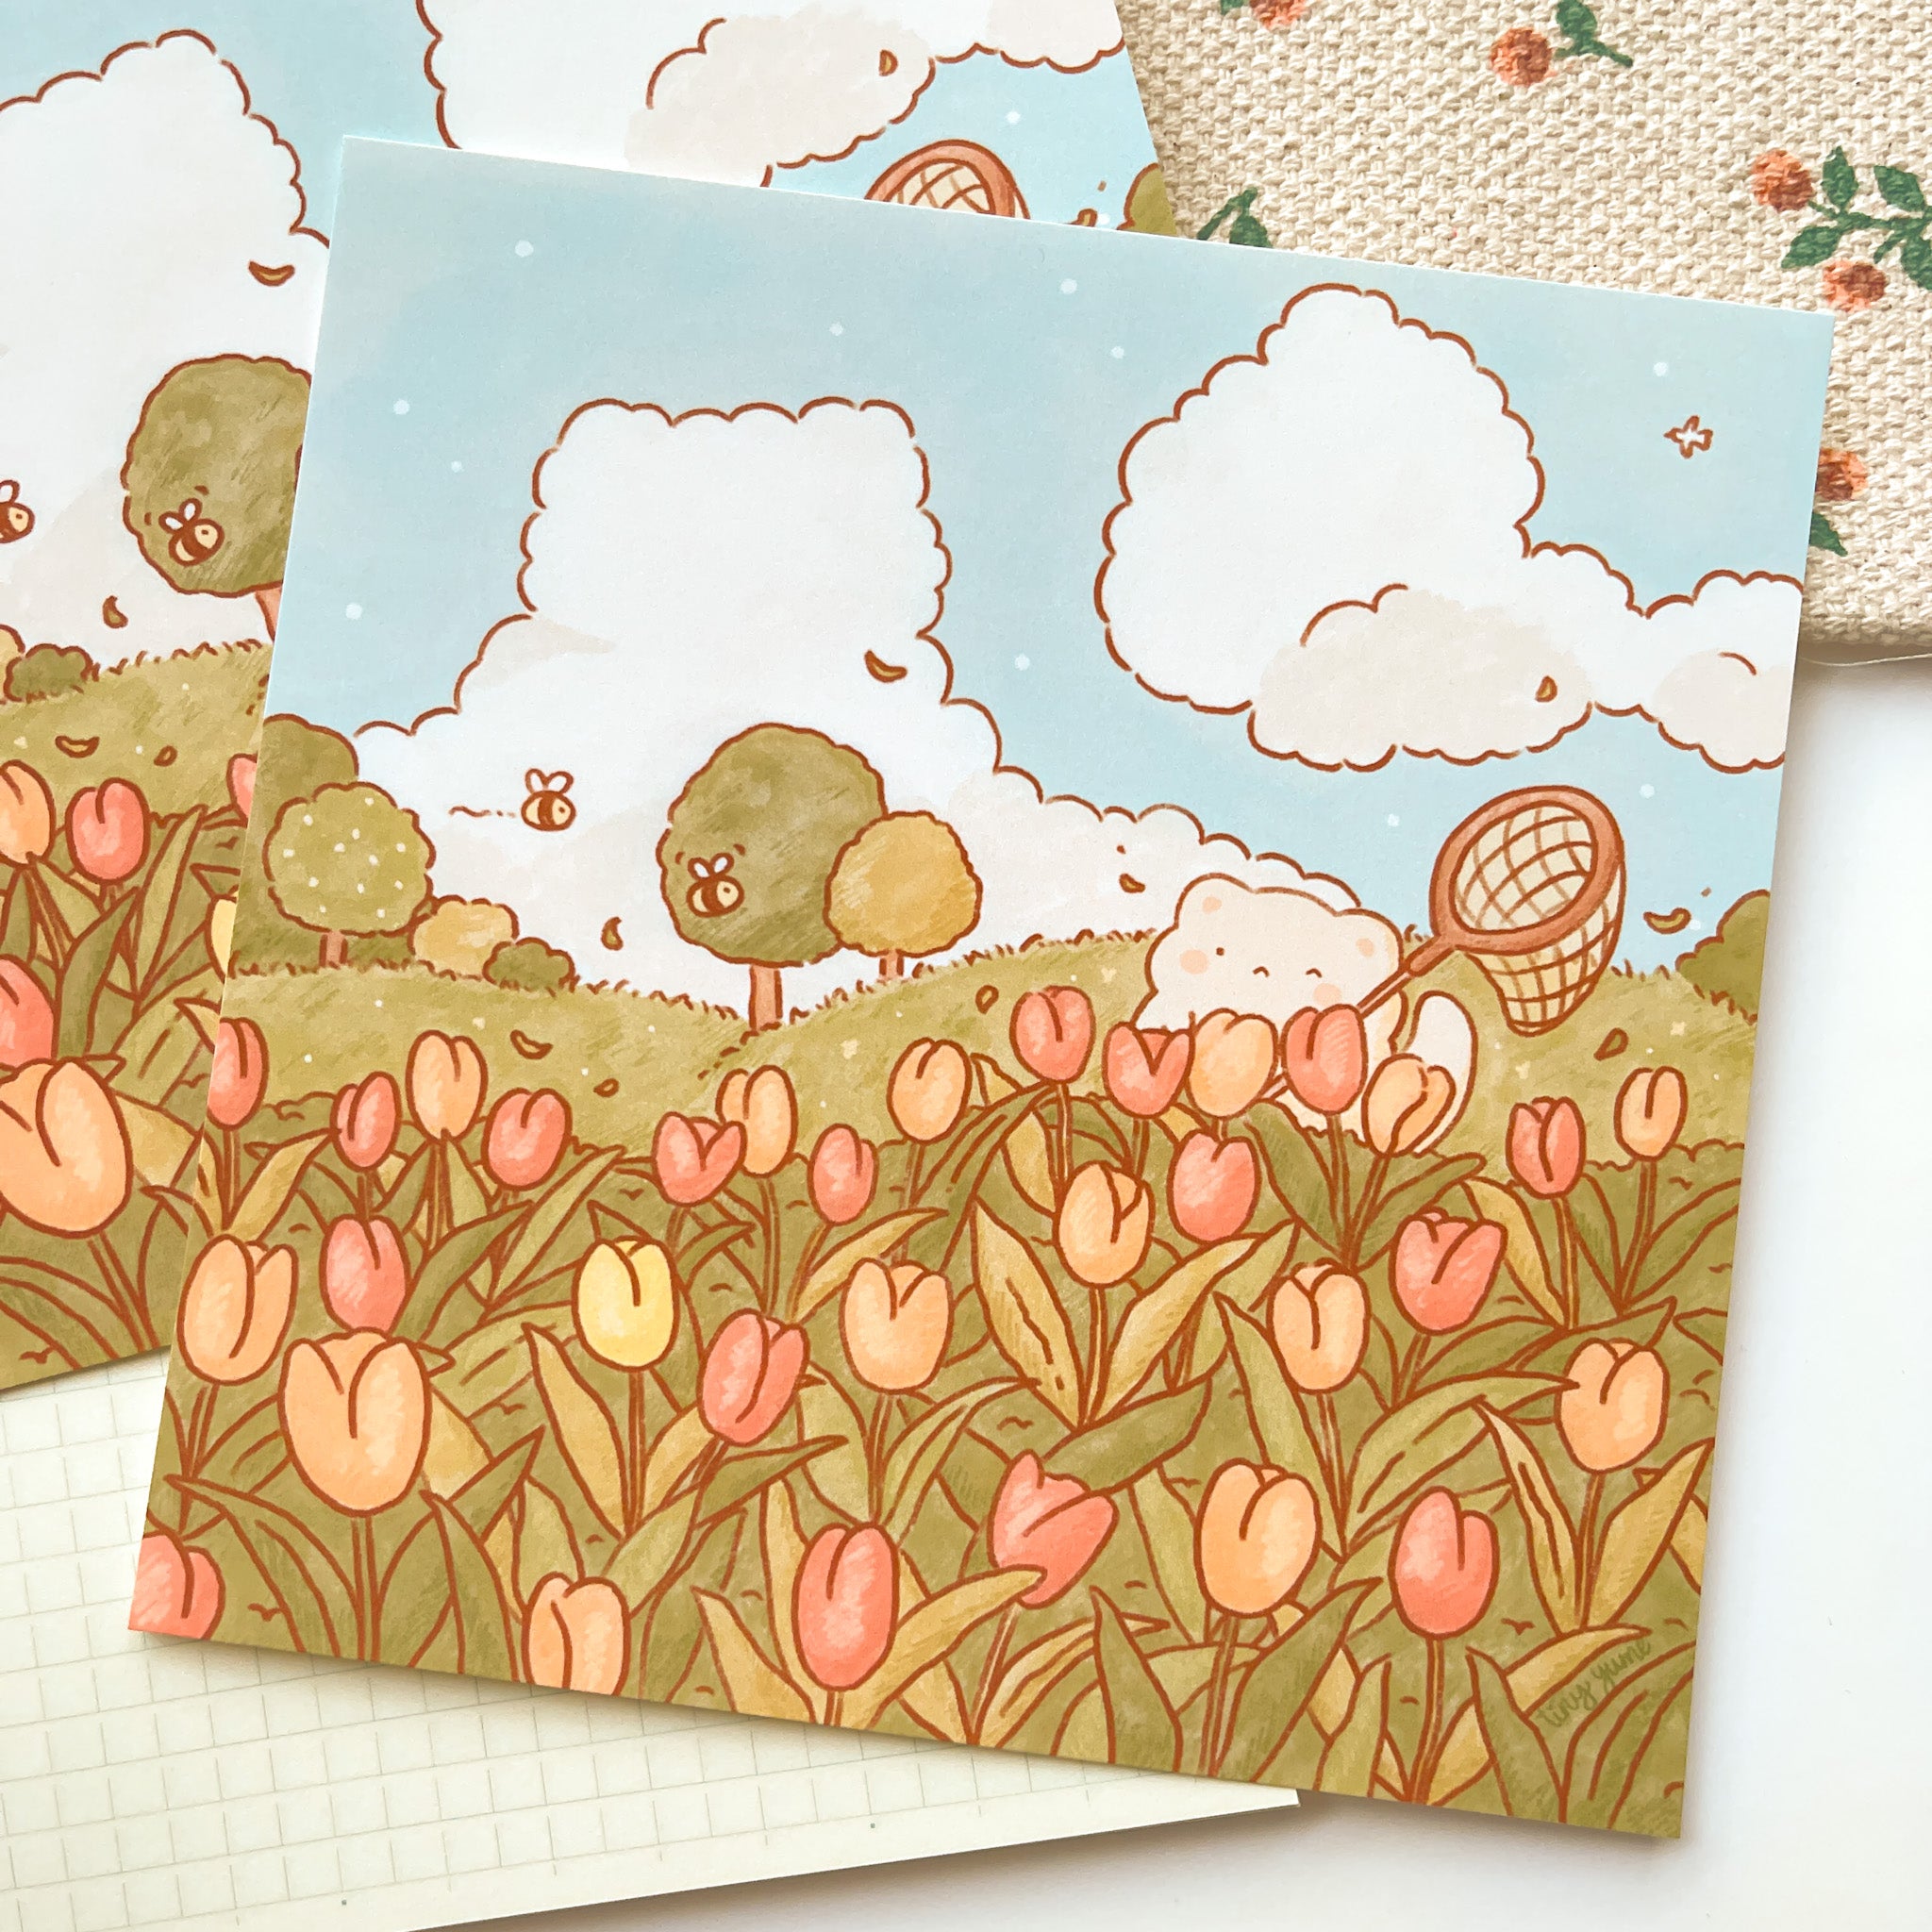 Tiny Yume tulip Print, Handmade Print, Cute Mini Print, Cute Wall Decor, Cute Illustration